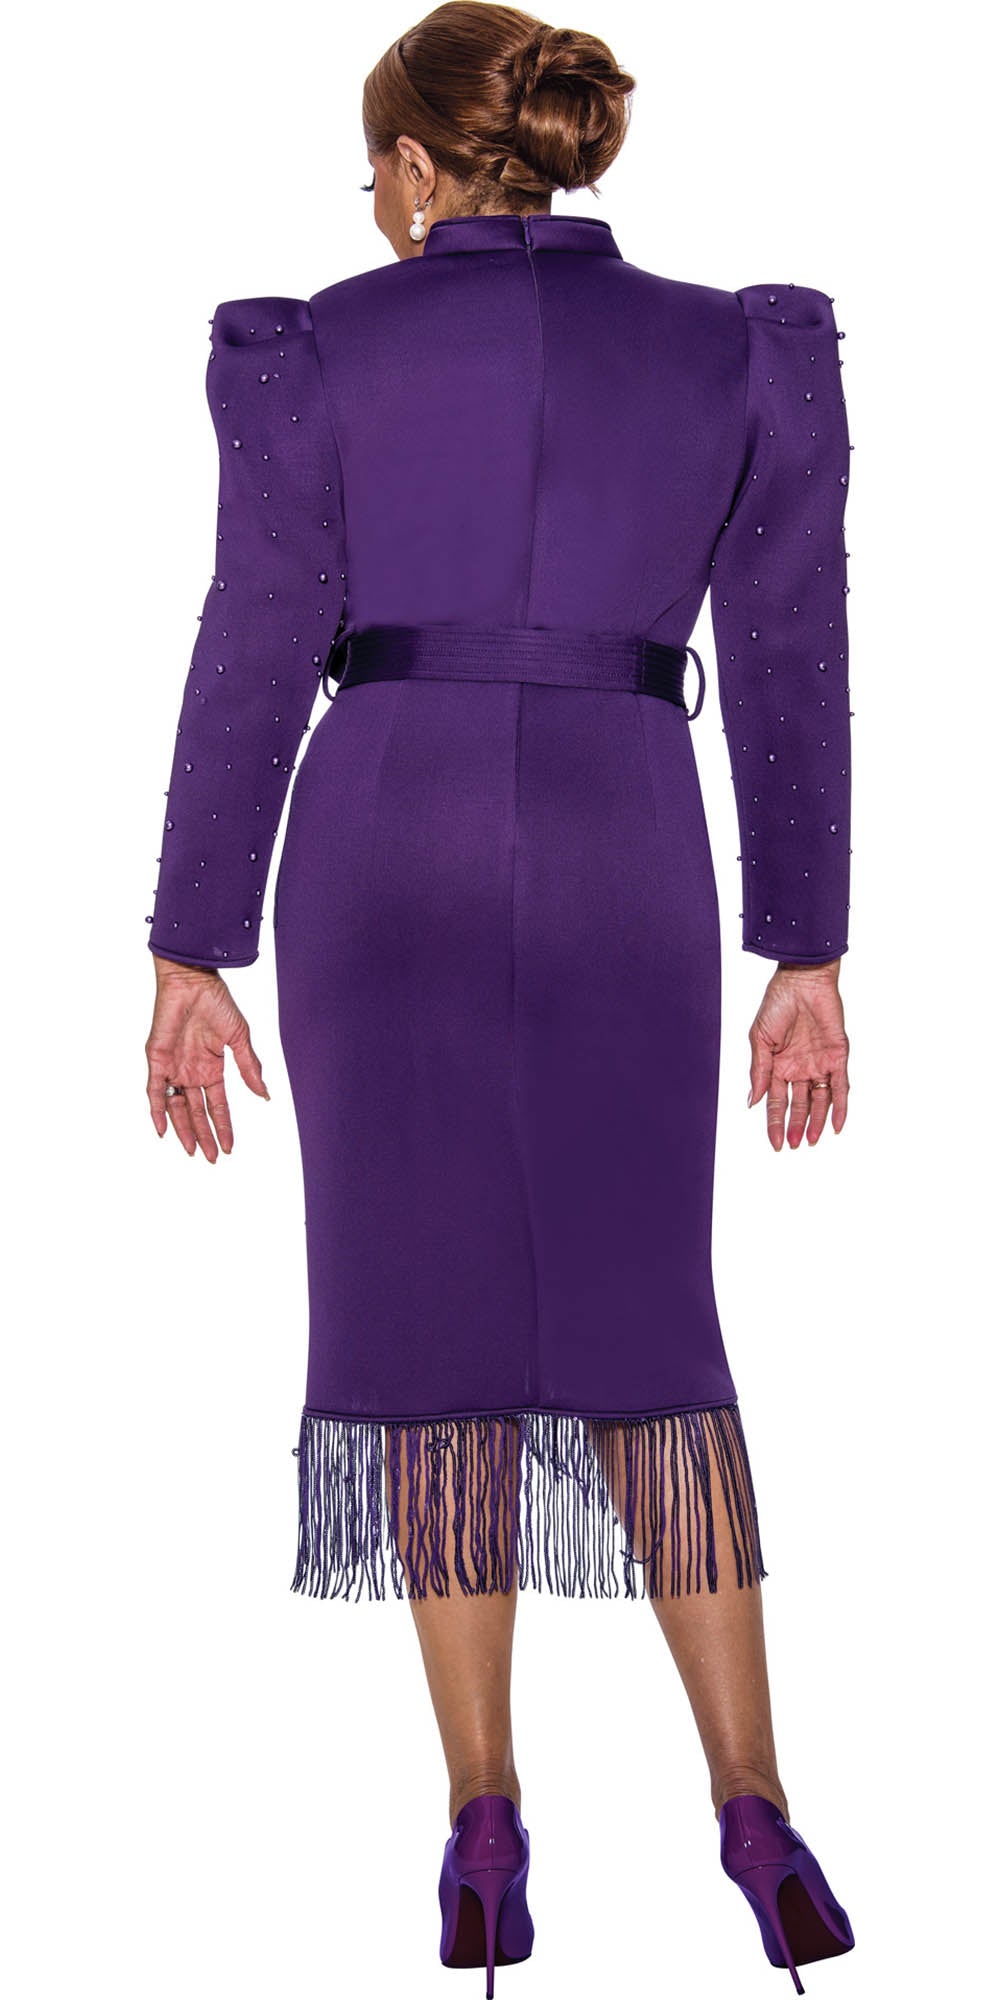 Dorinda Clark Cole - 5171 - Purple - Pearl Embellished Scuba Fabric Dress with Fringe Hemline